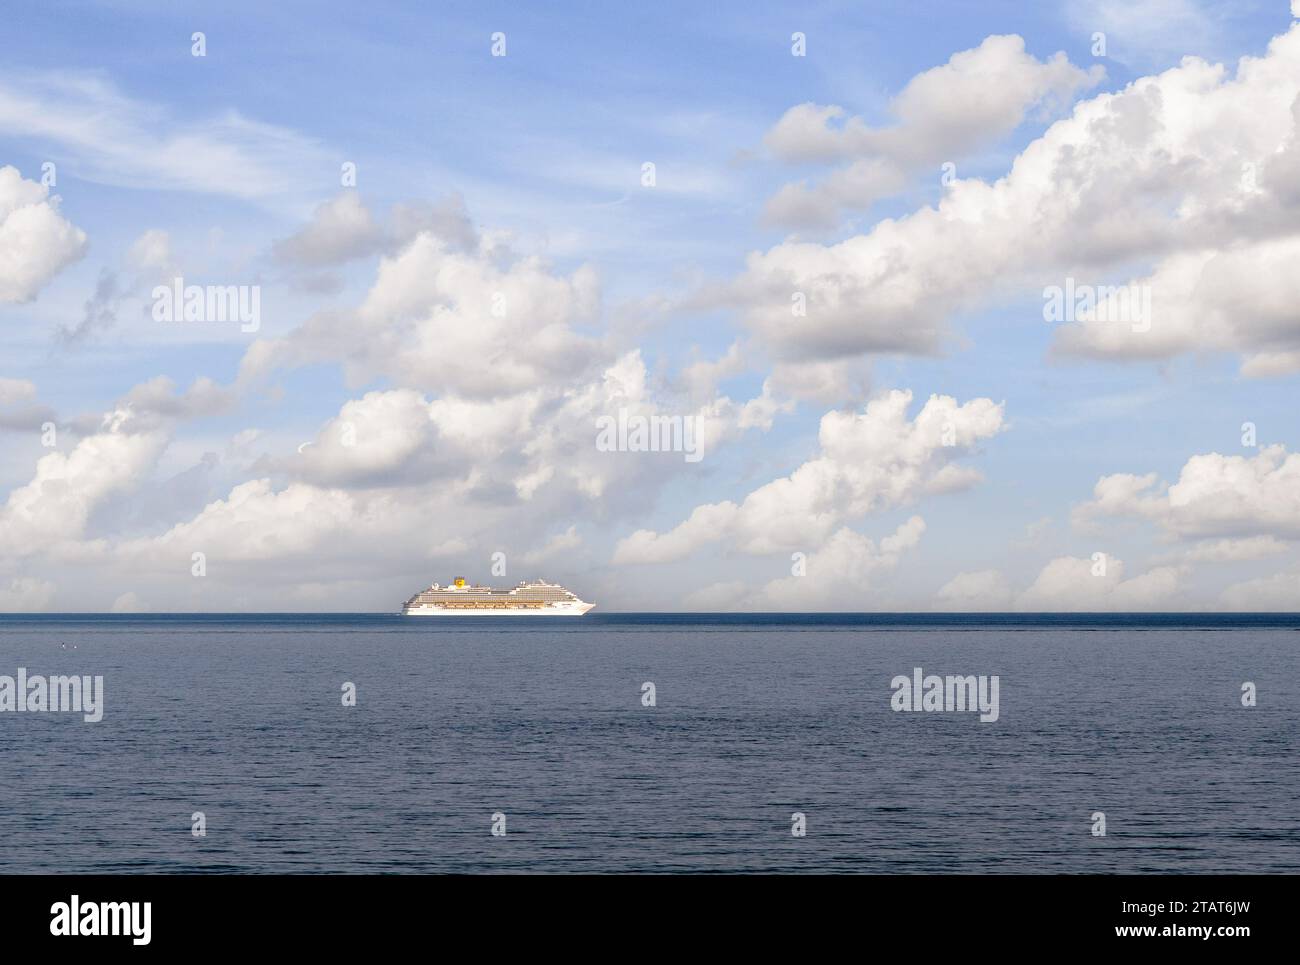 Costa Crociere cruise ship sailing offshore in the Ligurian Sea, Liguria, Italy Stock Photo